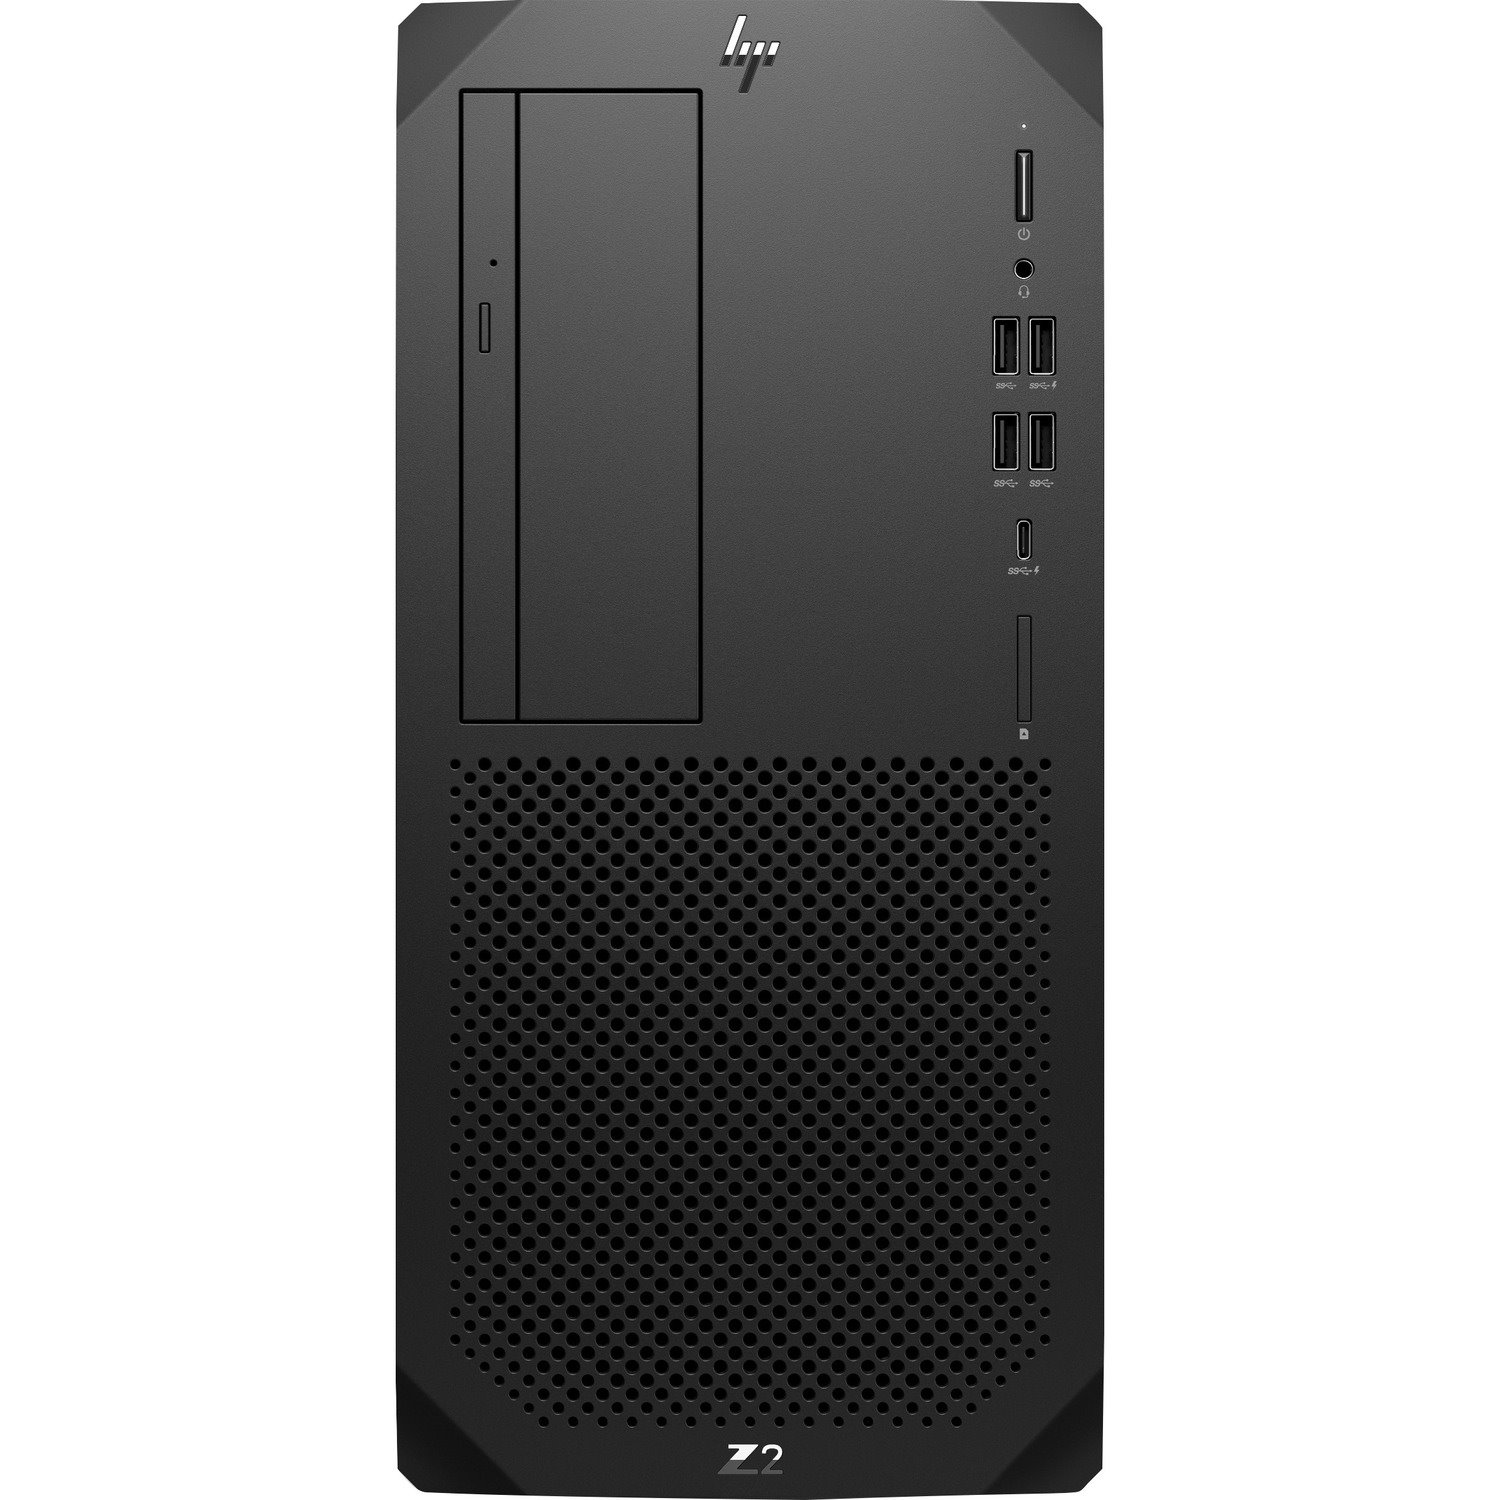 HP Z2 G9 Workstation - 1 x Intel Core i7 12th Gen i7-12700 - 32 GB - 512 GB SSD - Tower - Black